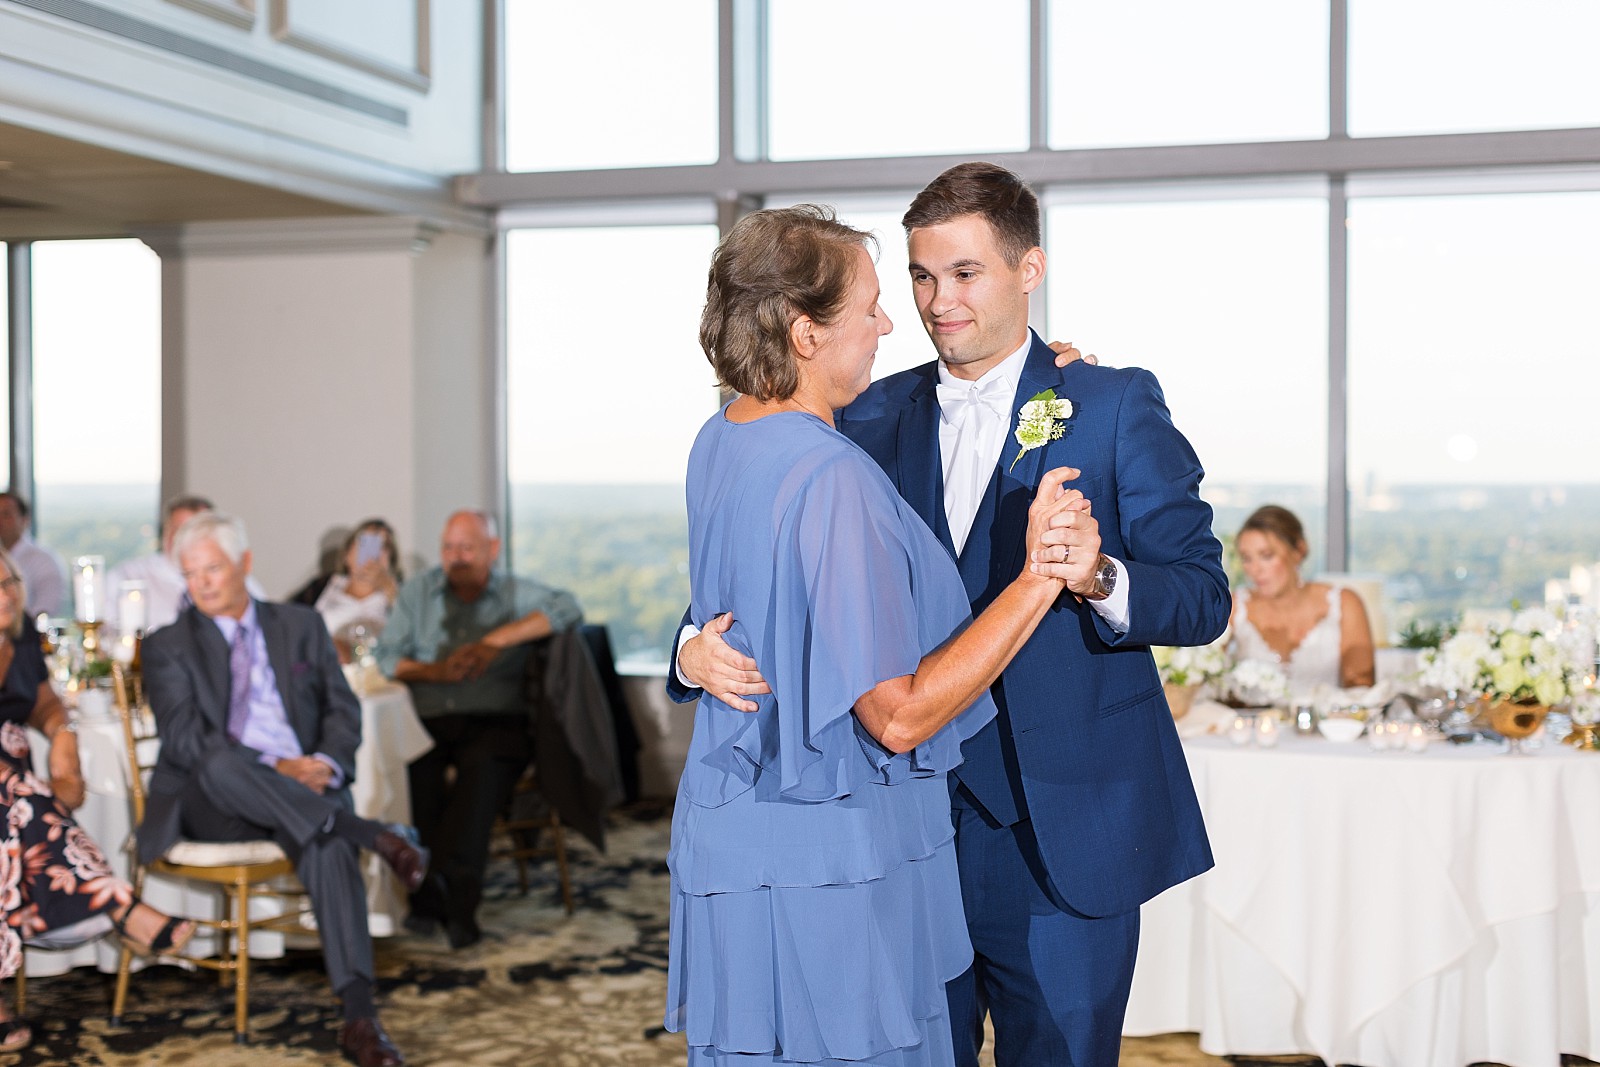 Mother Son dance | Raleigh Wedding Photographer Sarah Hinckley